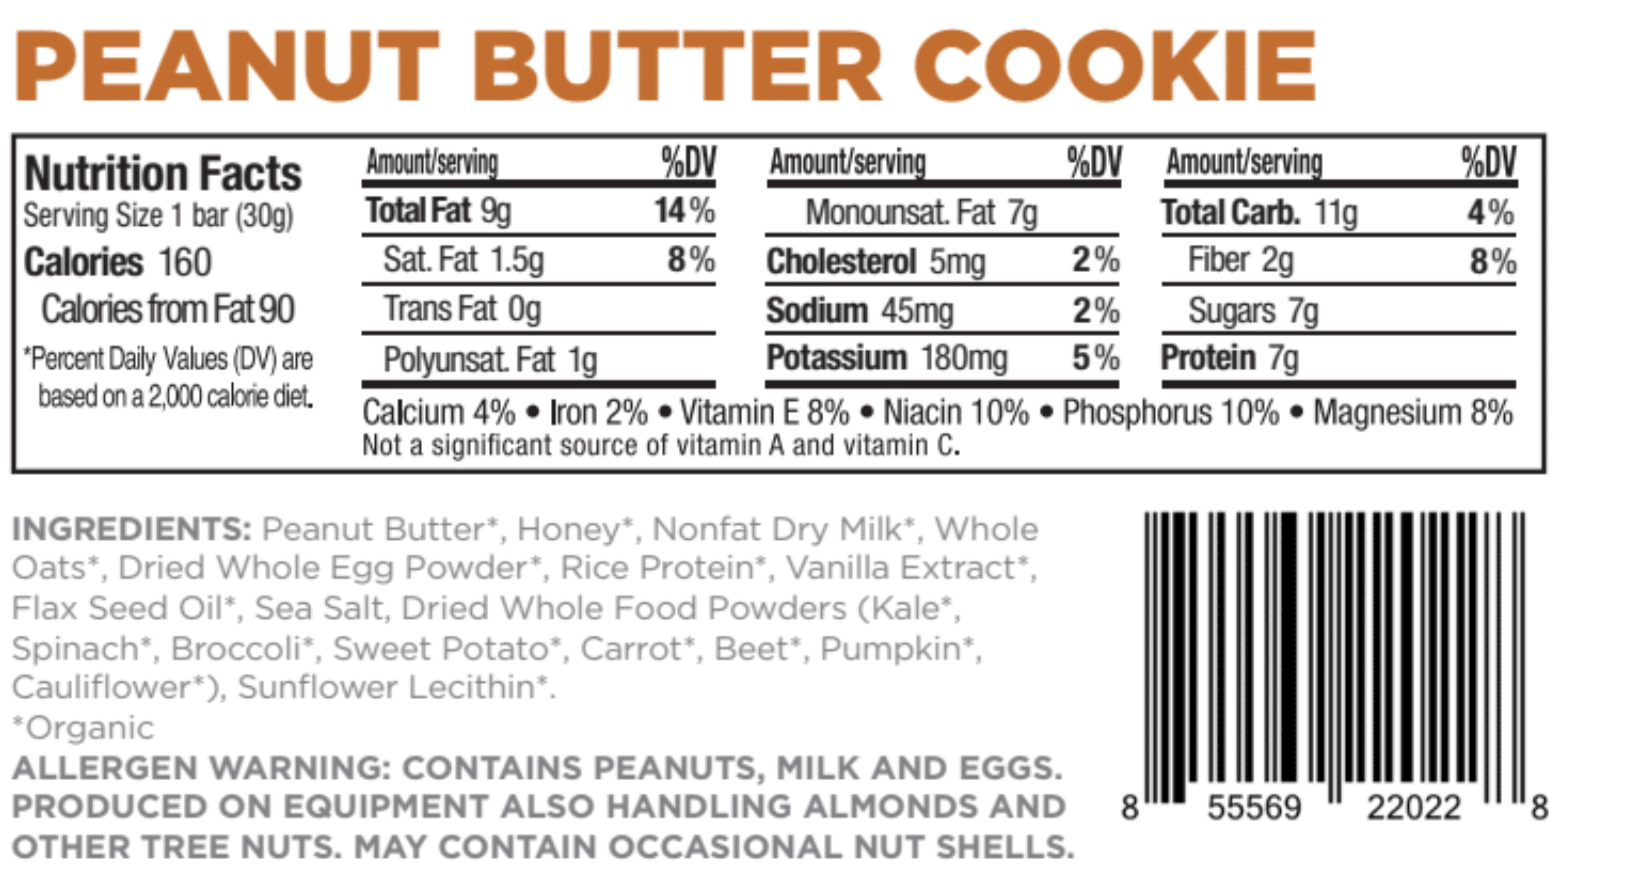 Peanut Butter Cookie Nutrition & Ingredients